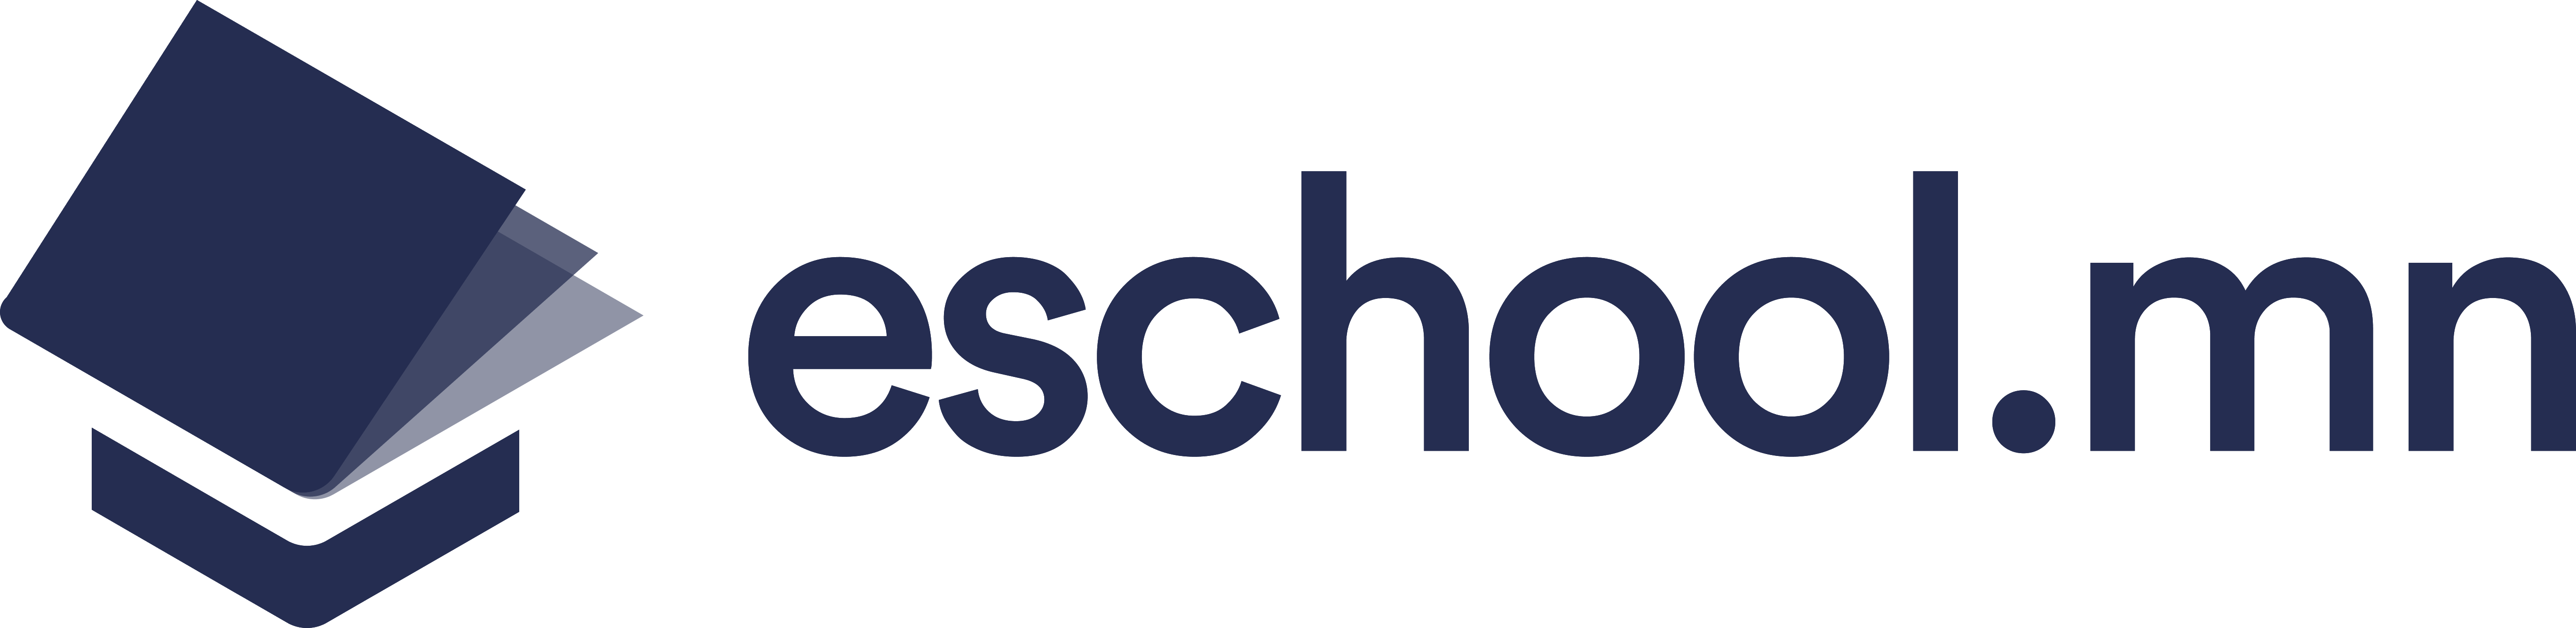 Eschool logo